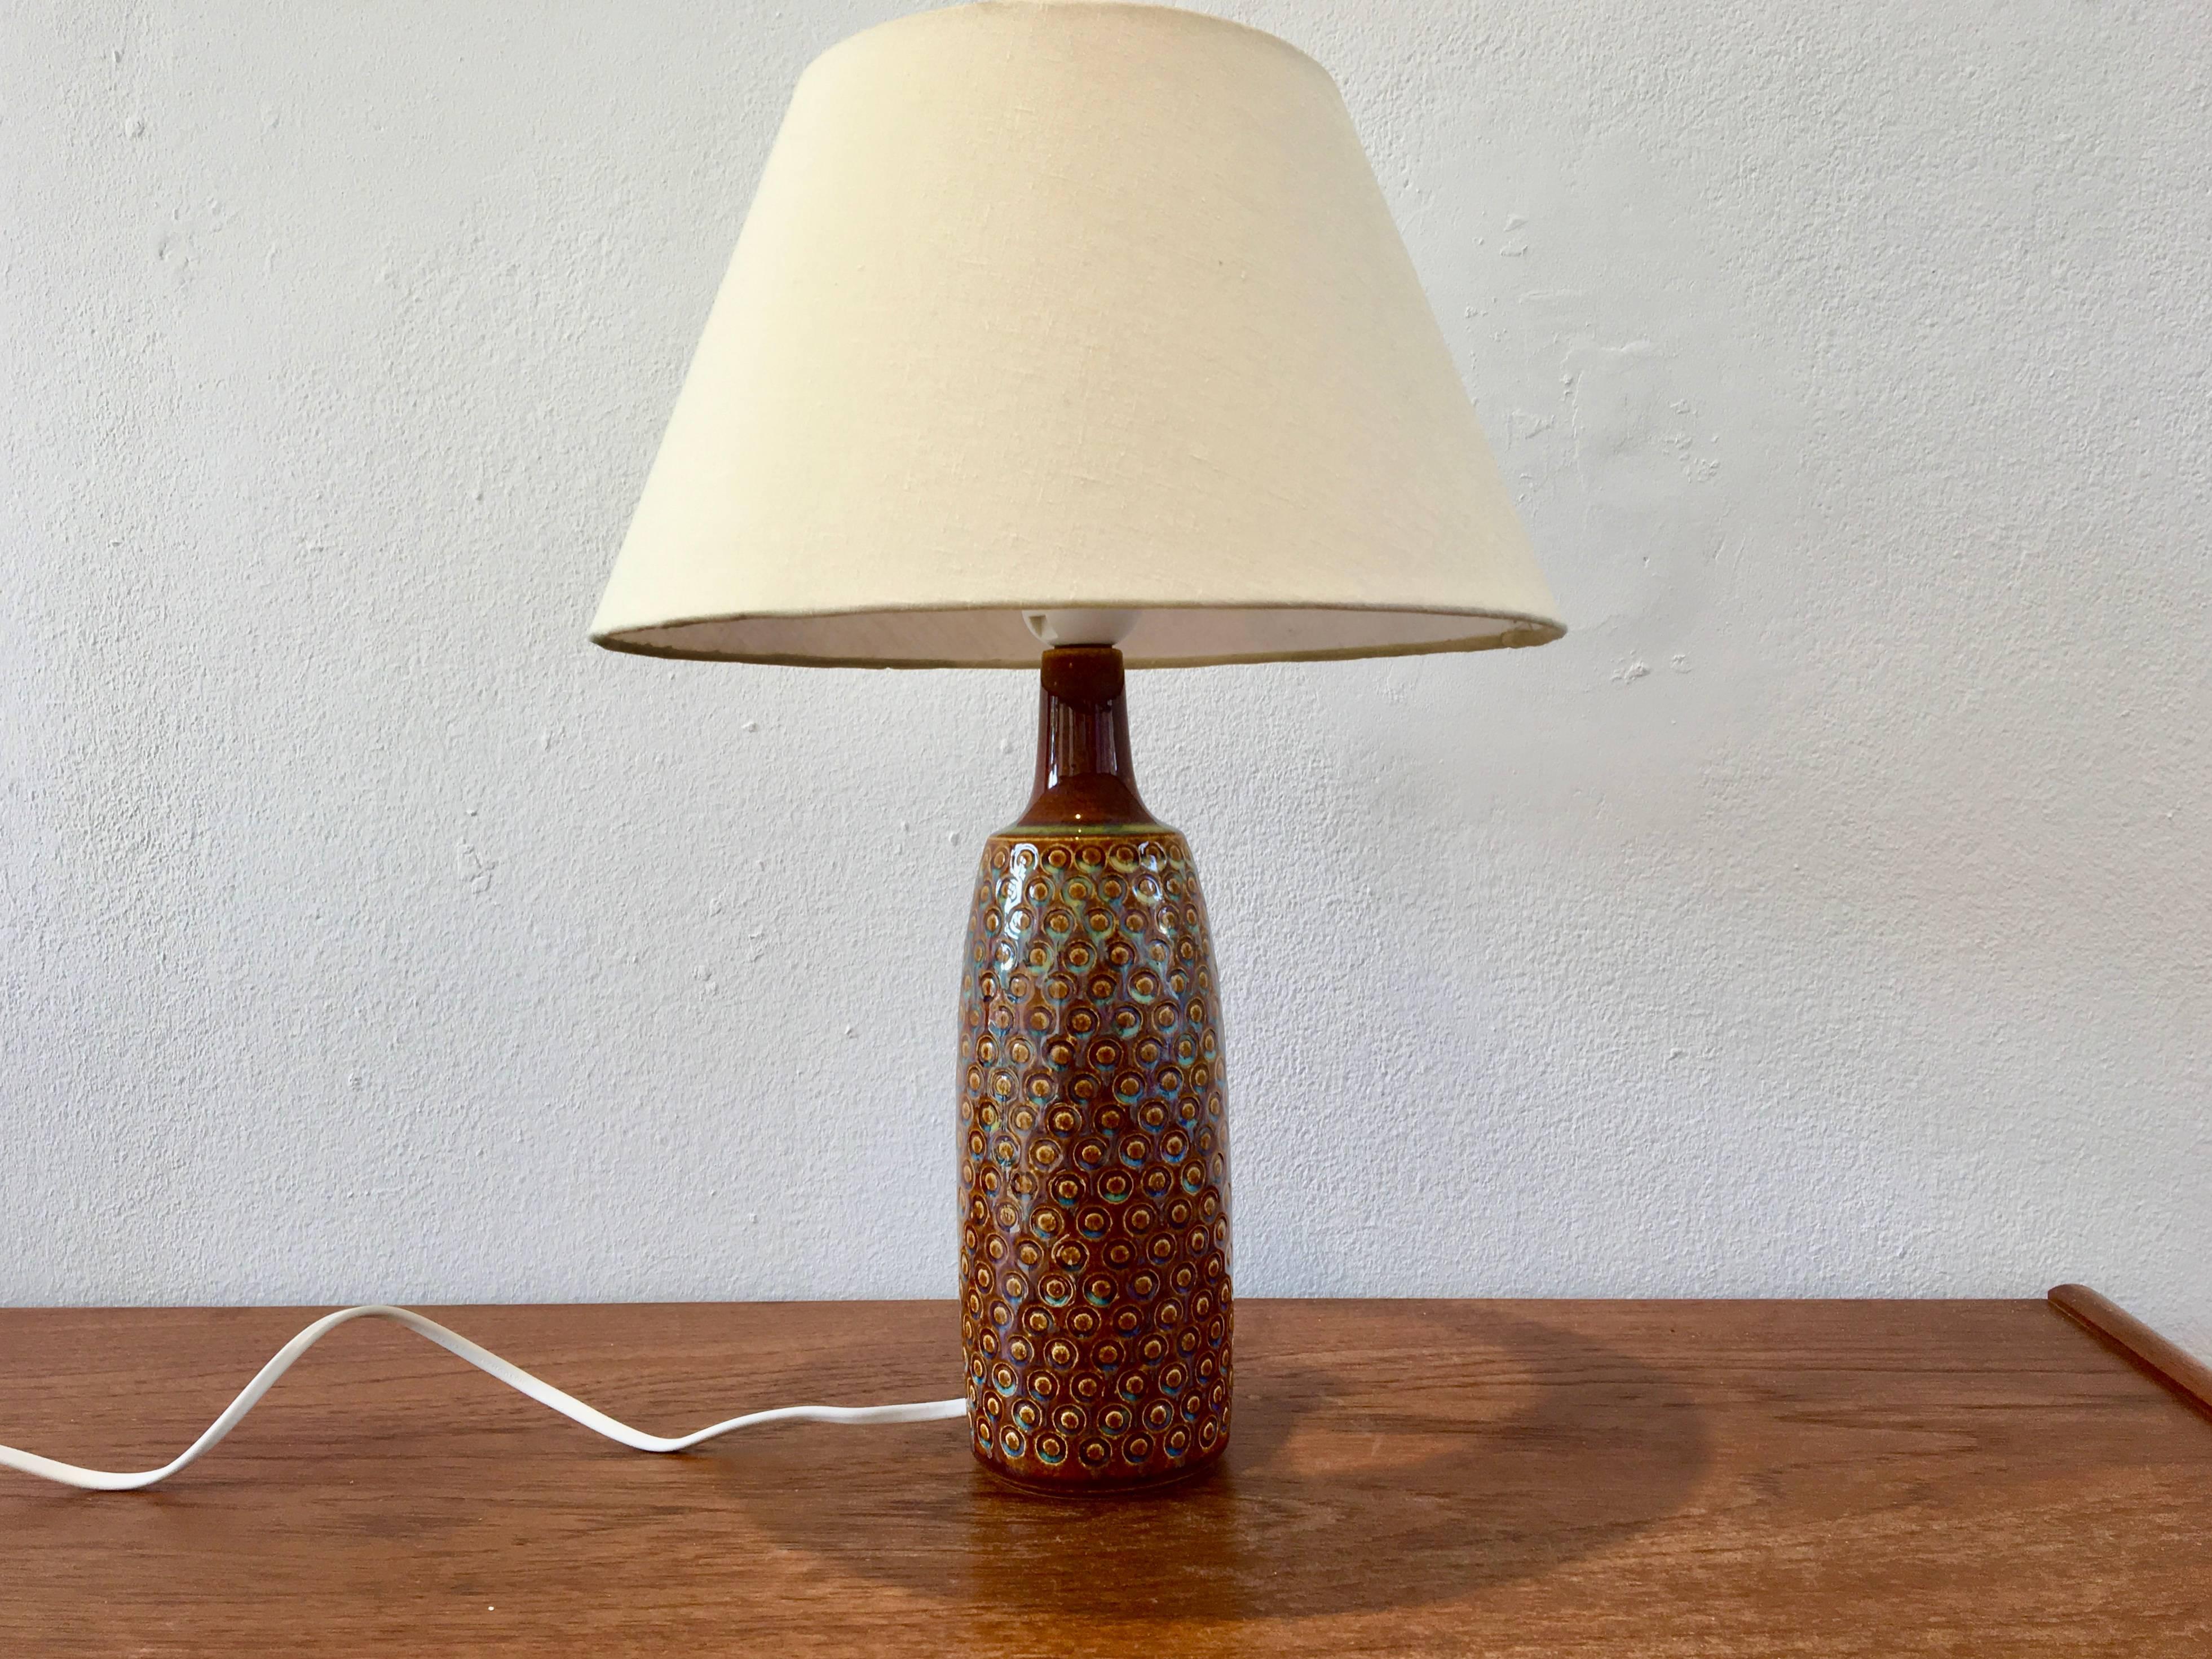 Glazed Vintage Brown Danish Ceramic Table Lamp by Einar Johansen for Soholm Stentoj